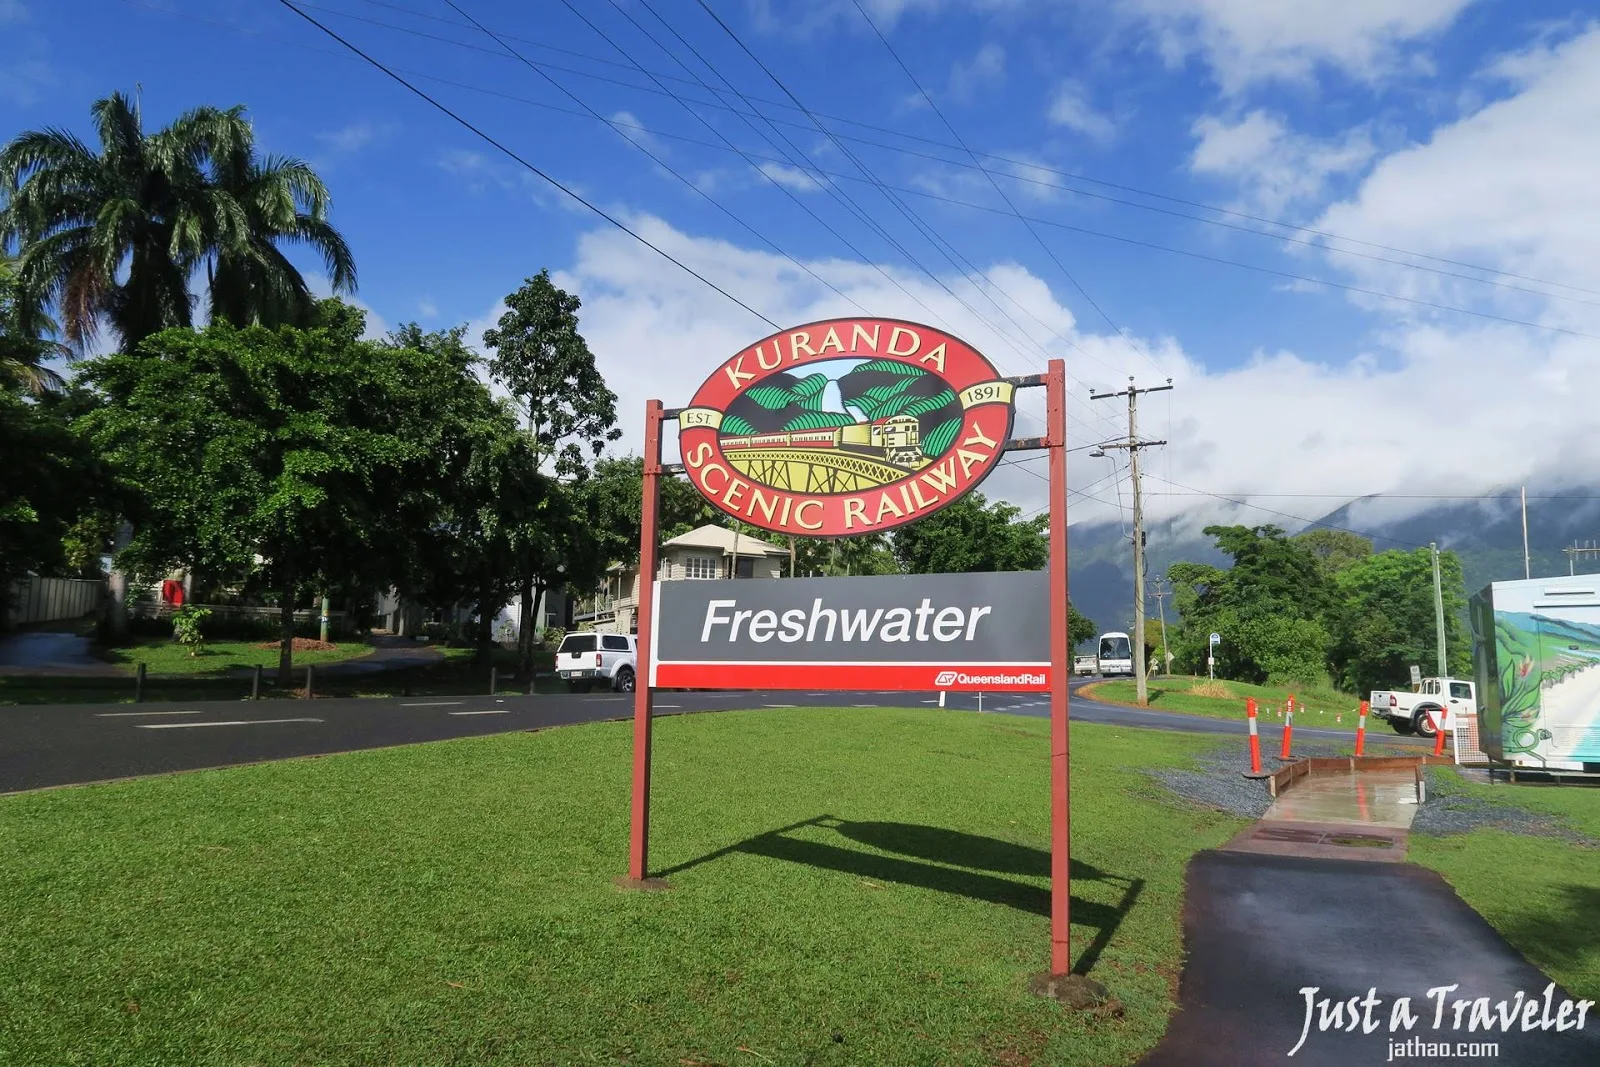 凱恩斯-庫蘭達-庫蘭達交通-清水站-庫蘭達觀光火車-自由行-旅遊-澳洲-Cairns-Kuranda-Scenic-Railway-Freshwater-Travel-Tourist-Attraction-Australia